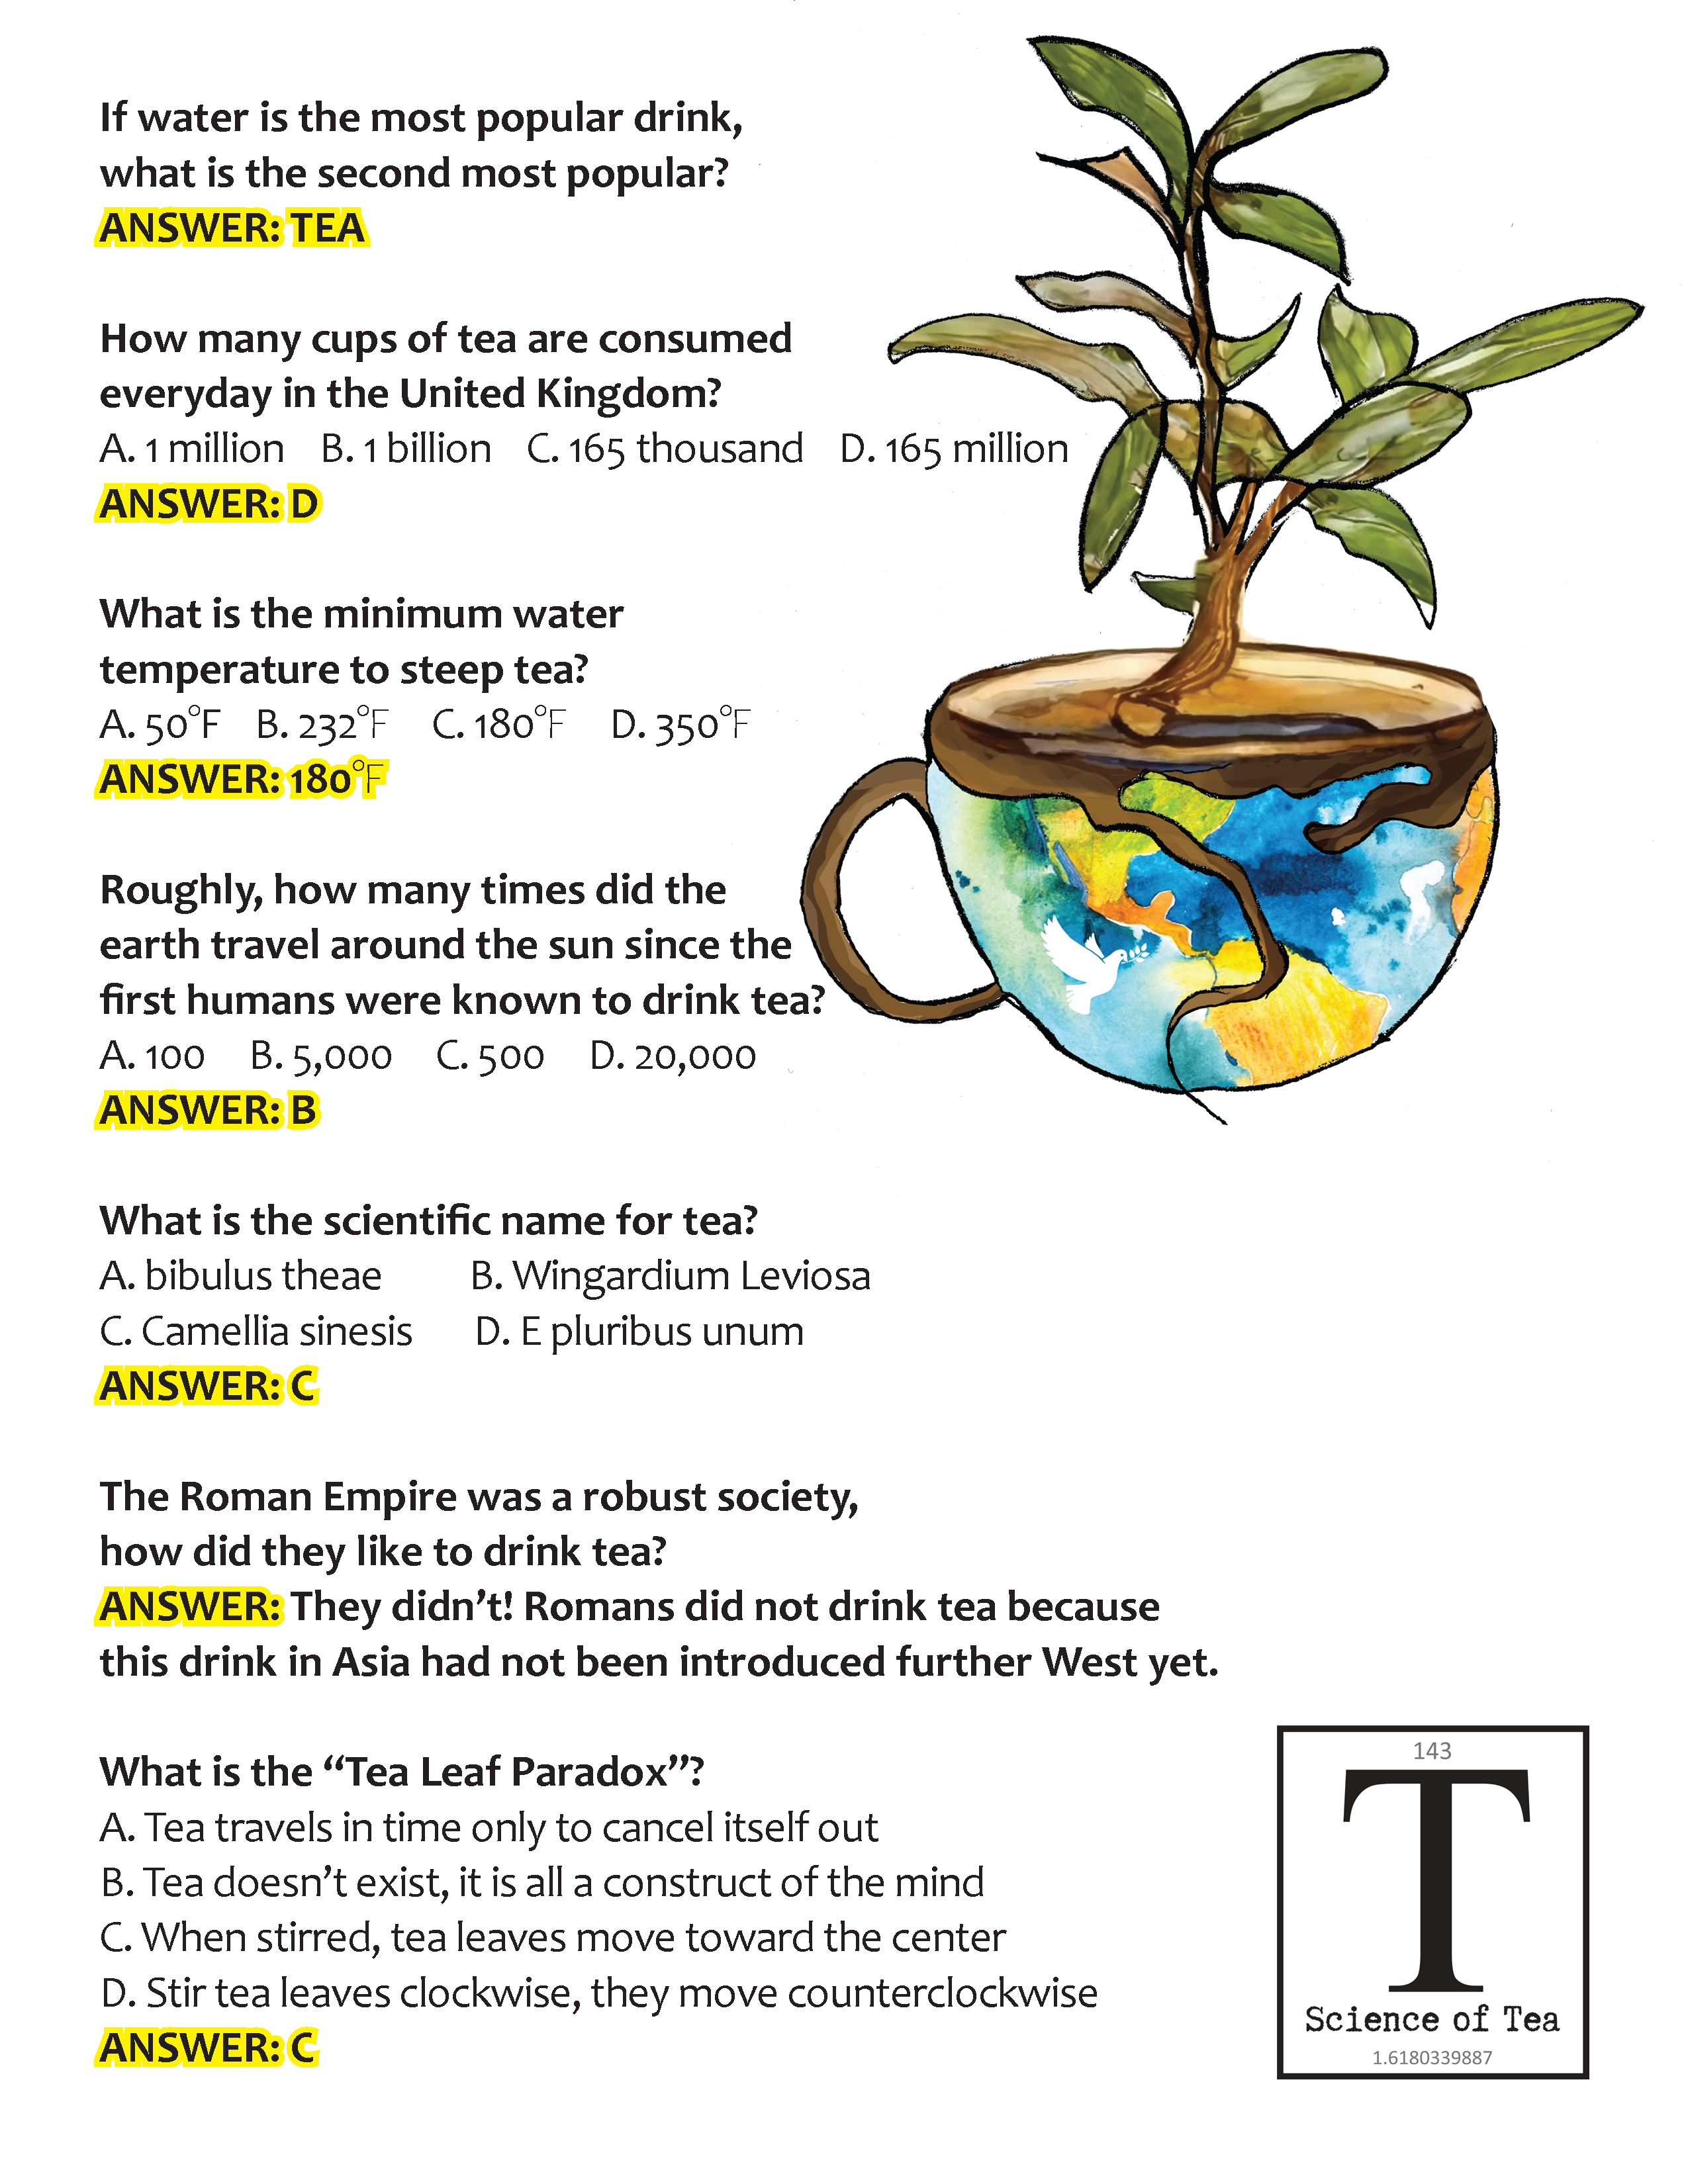 Science of Tea Trivia